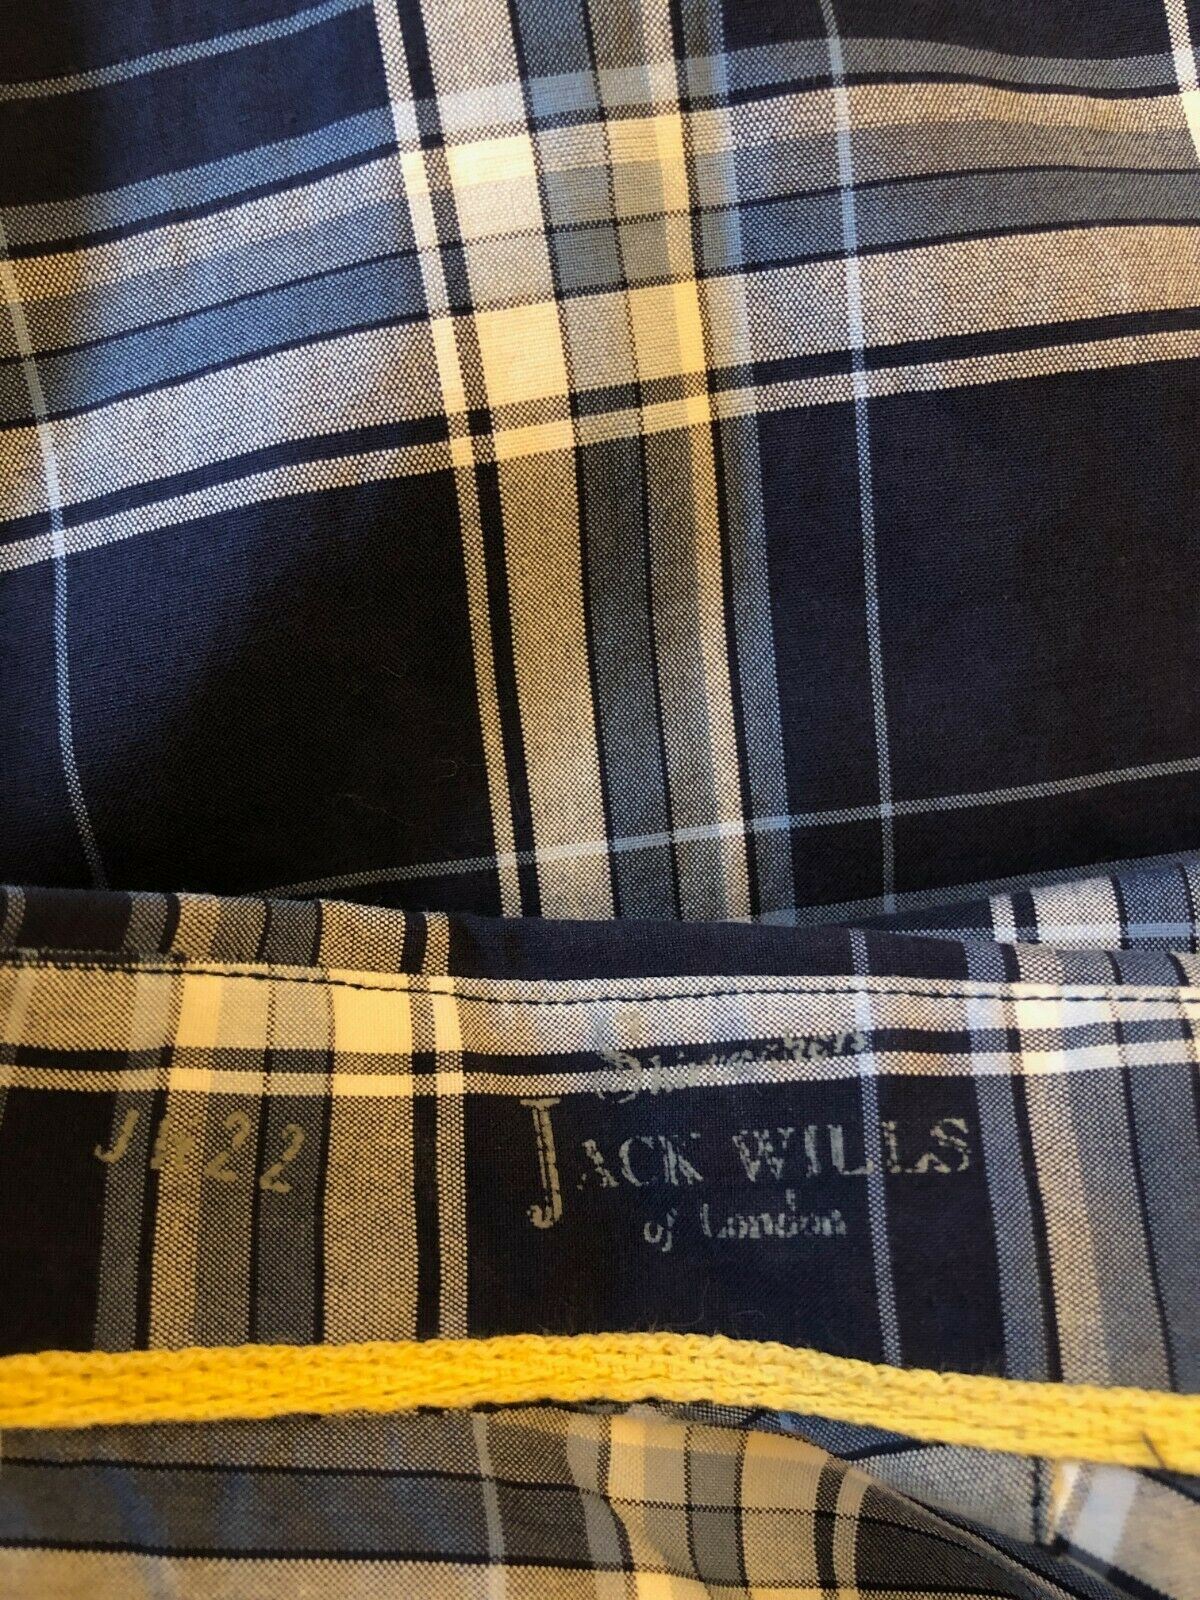 Jack Wills Men's Blue & White Check Cotton Long Sleeve Shirt Size XS Timeless Fashions